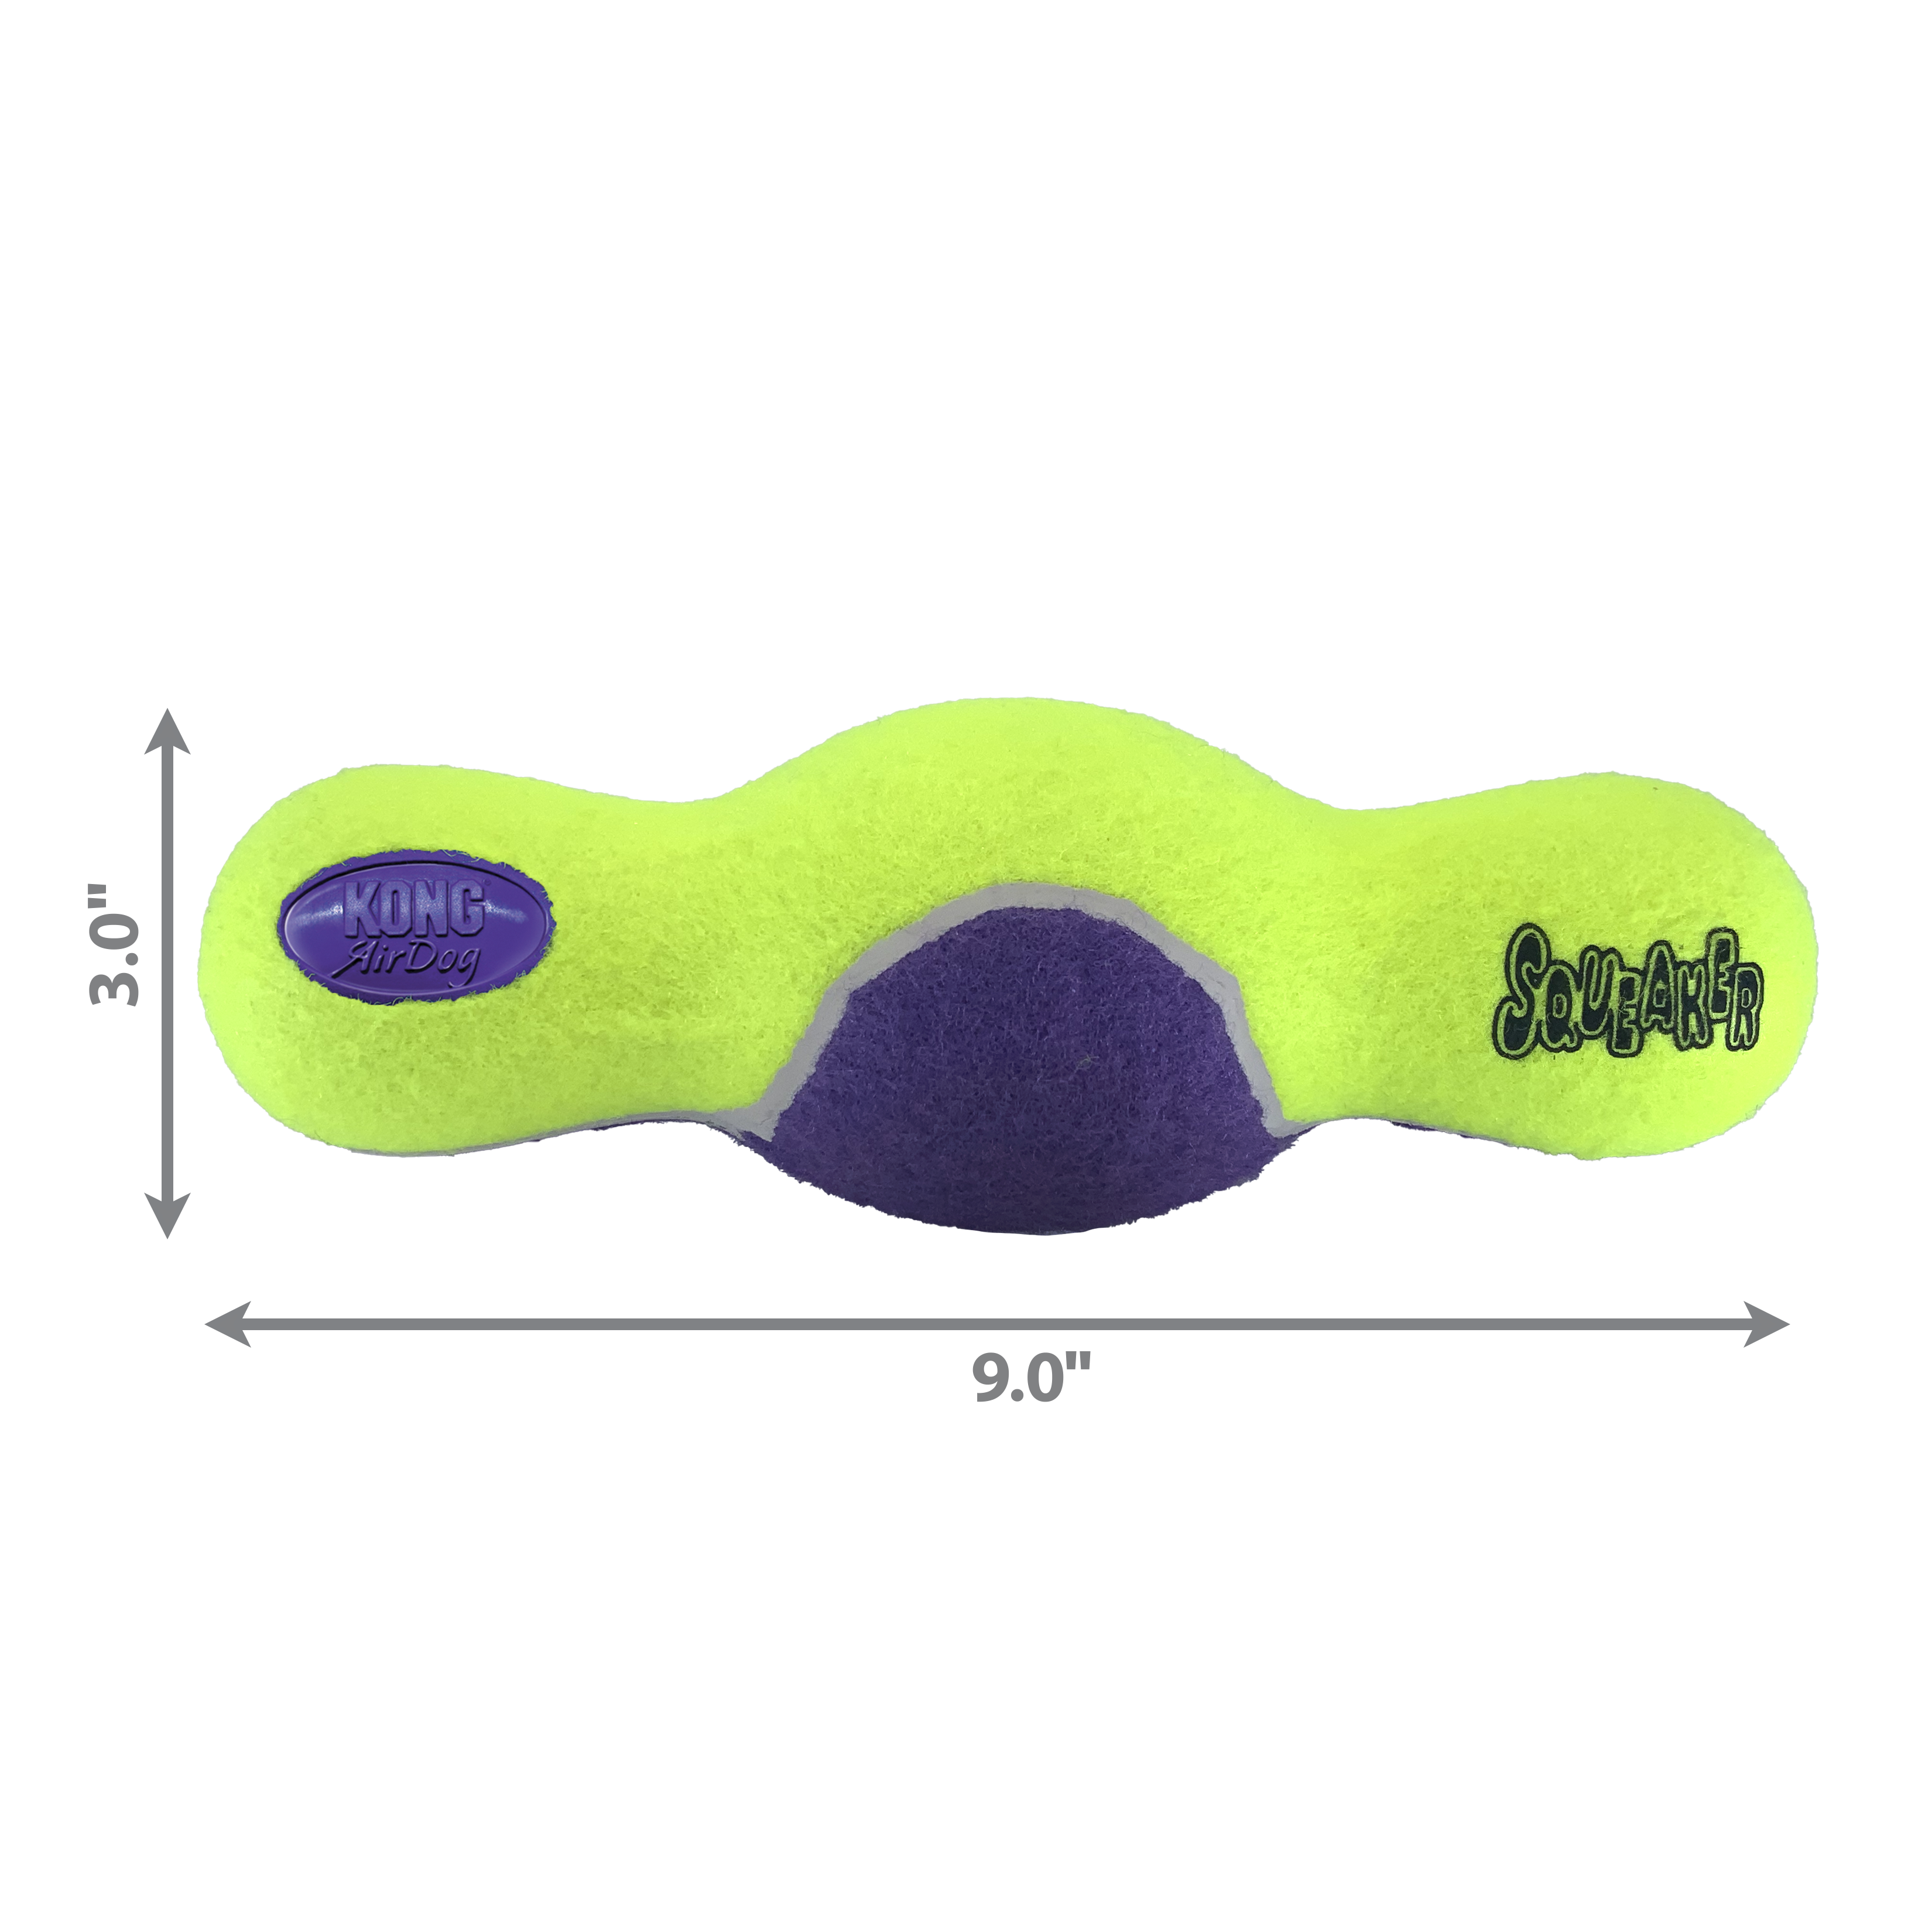 AirDog Squeaker Roller dimoffpack Produktbild